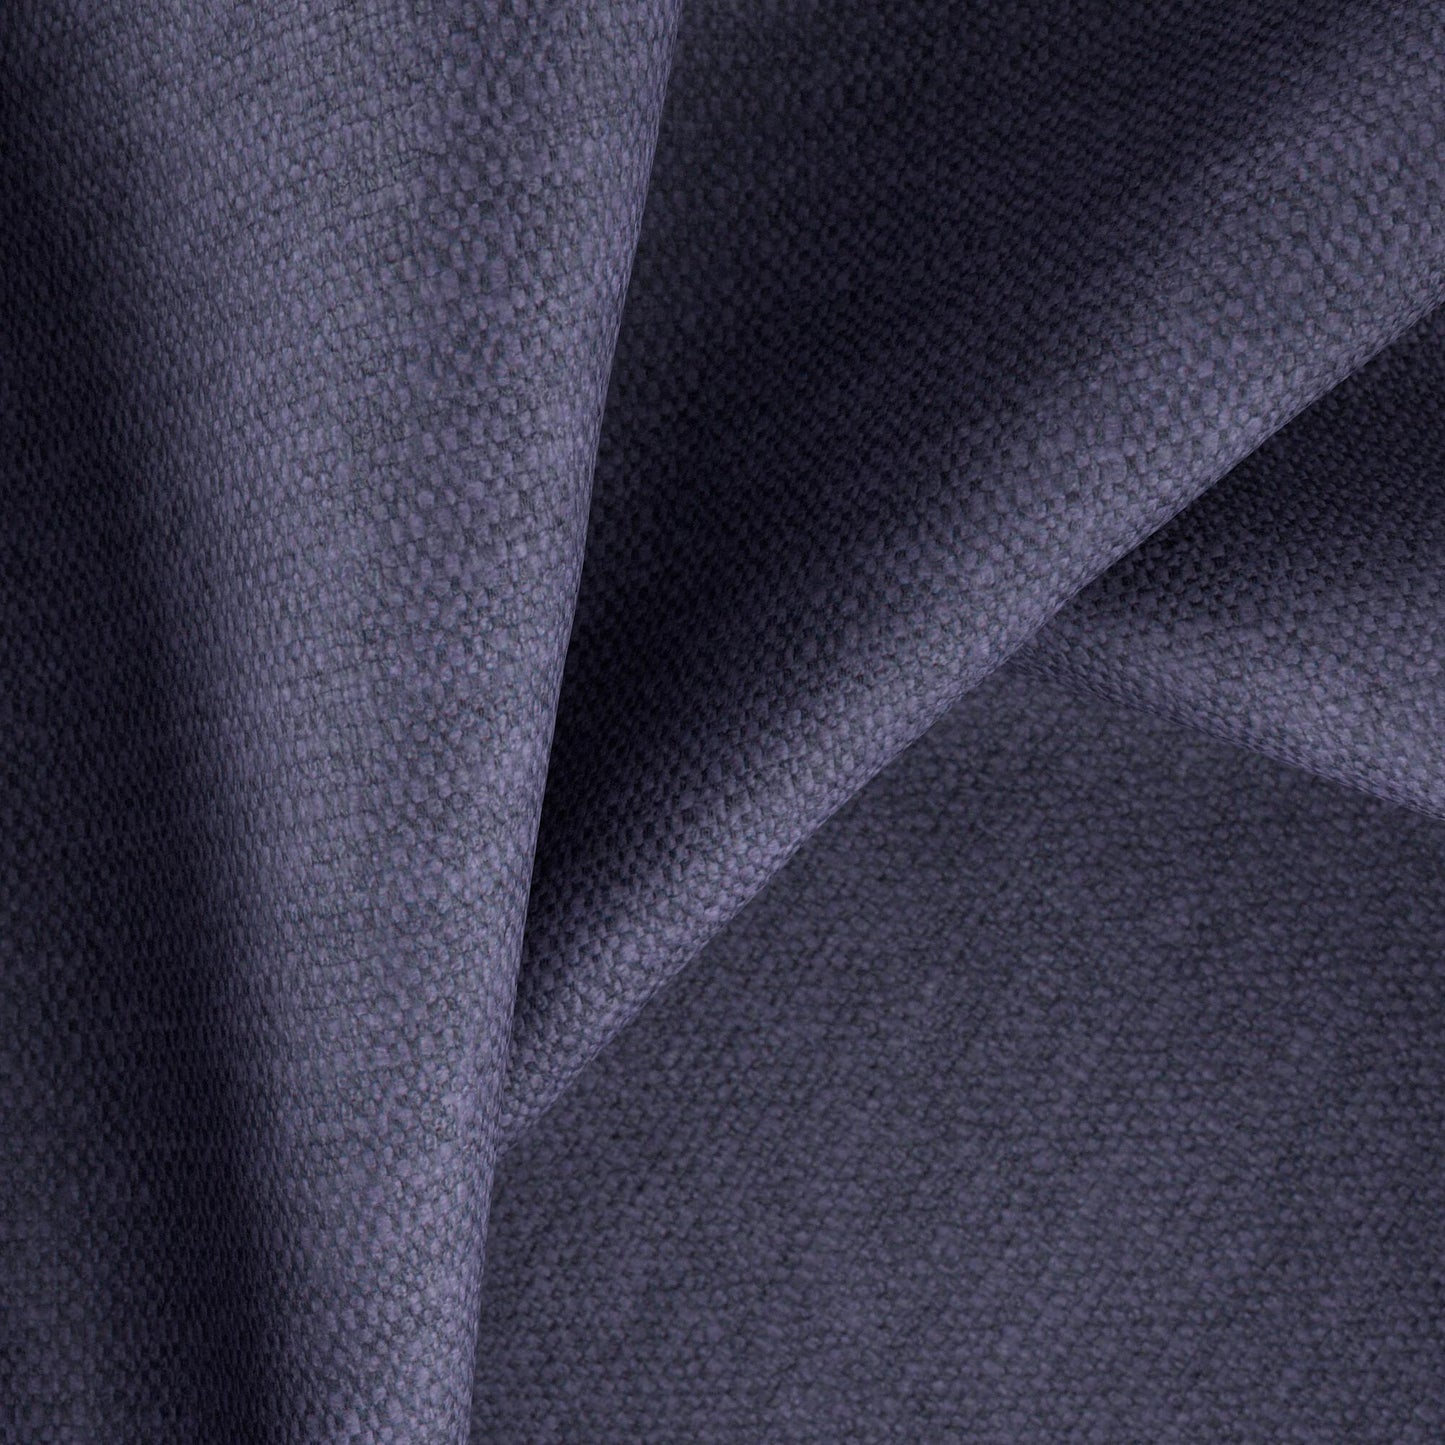 Home Fabrics - FibreGuard - Colourwash - 37-Navy - Fabric per Meter